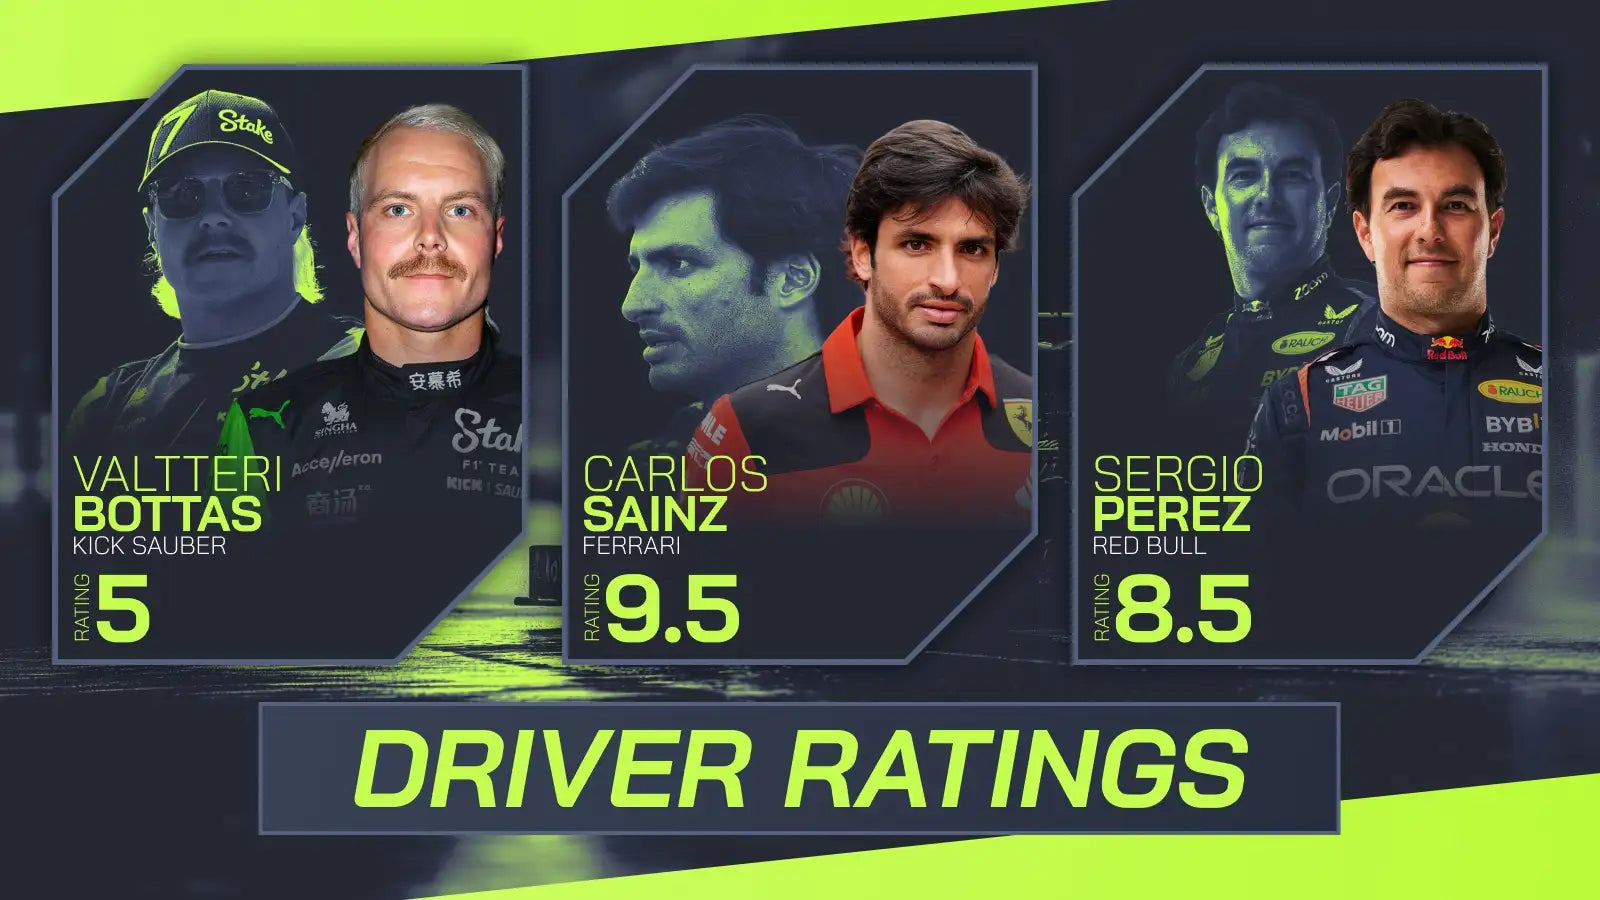 Bahrain Grand Prix driver ratings: A perfect 10, Sainz shines and Bottas flops